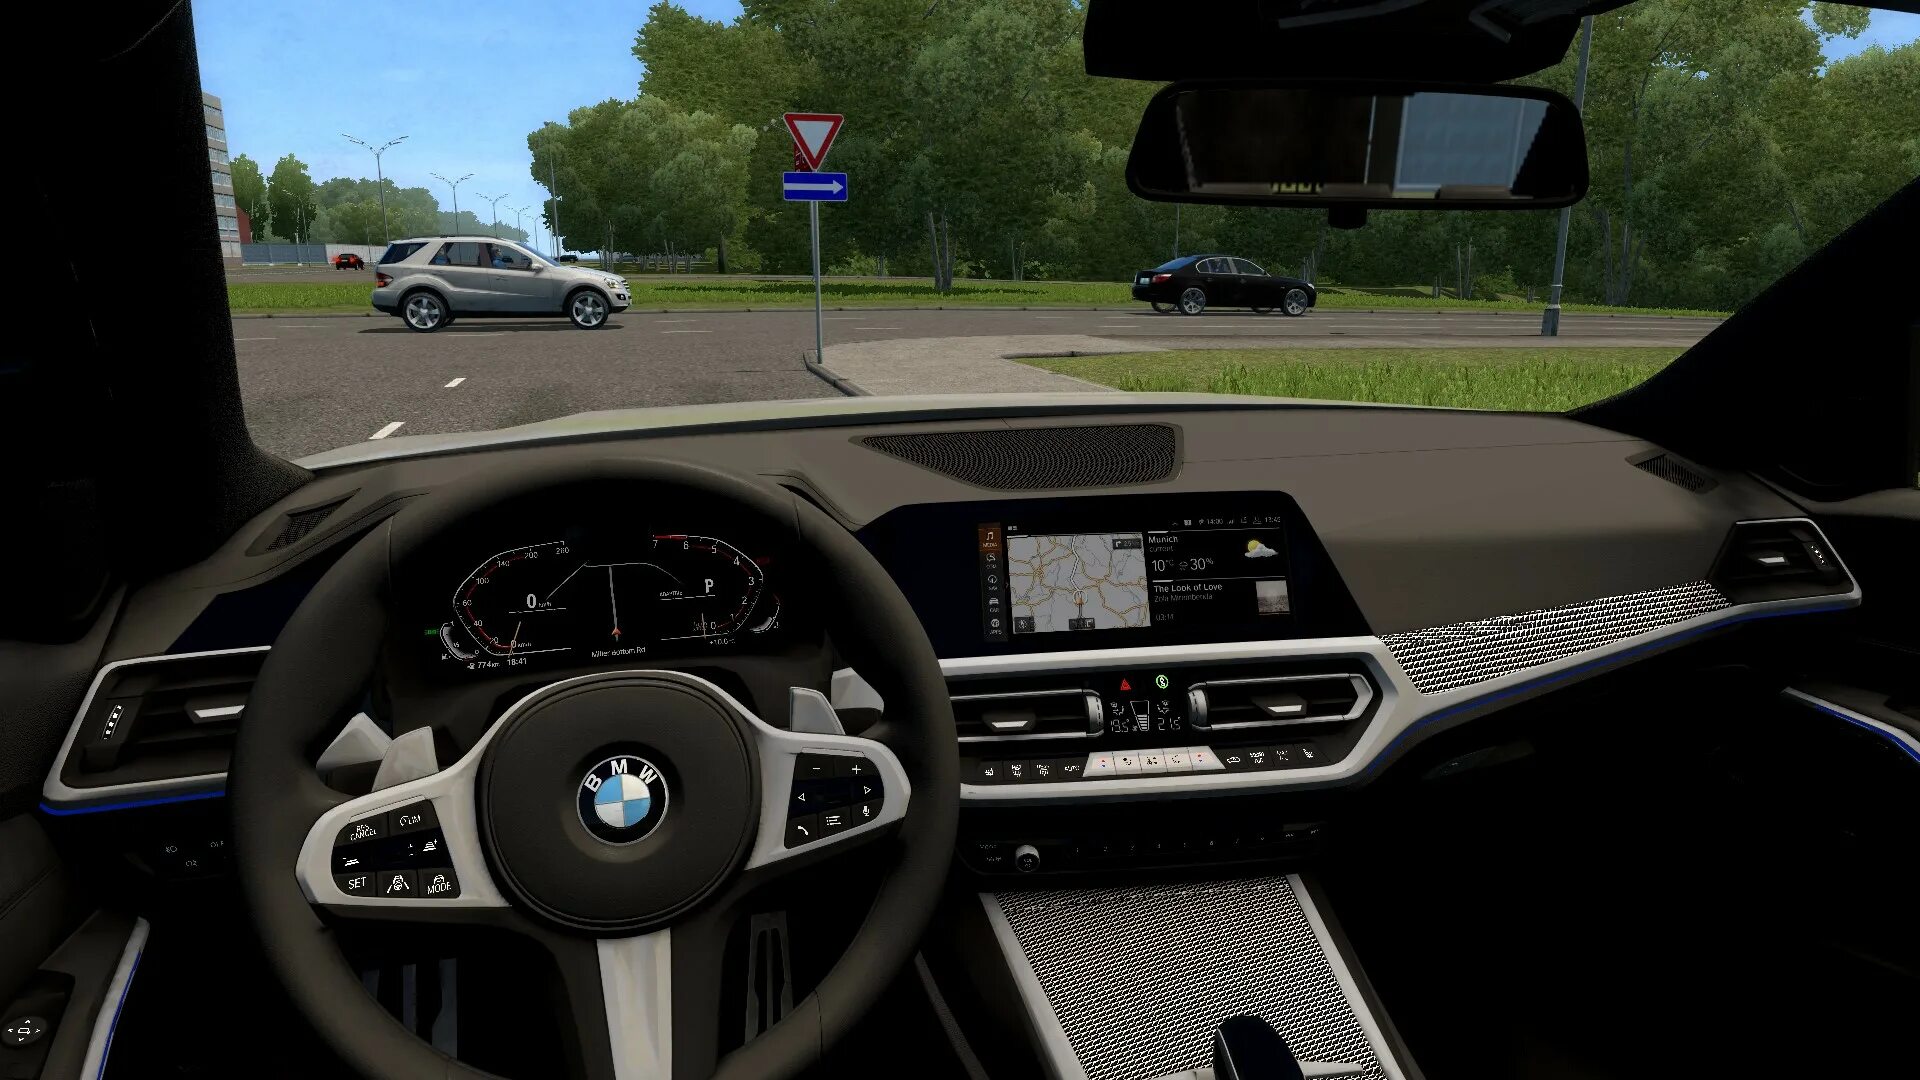 BMW 320 D City car Driving. BMW f30 для City car Driving. Мод на BMW e30 для City car Driving. BMW 320d m-Sport (g20) 2019 версия 11.01.22 для City car Driving. Моды сити кар драйвинг м5 ф10